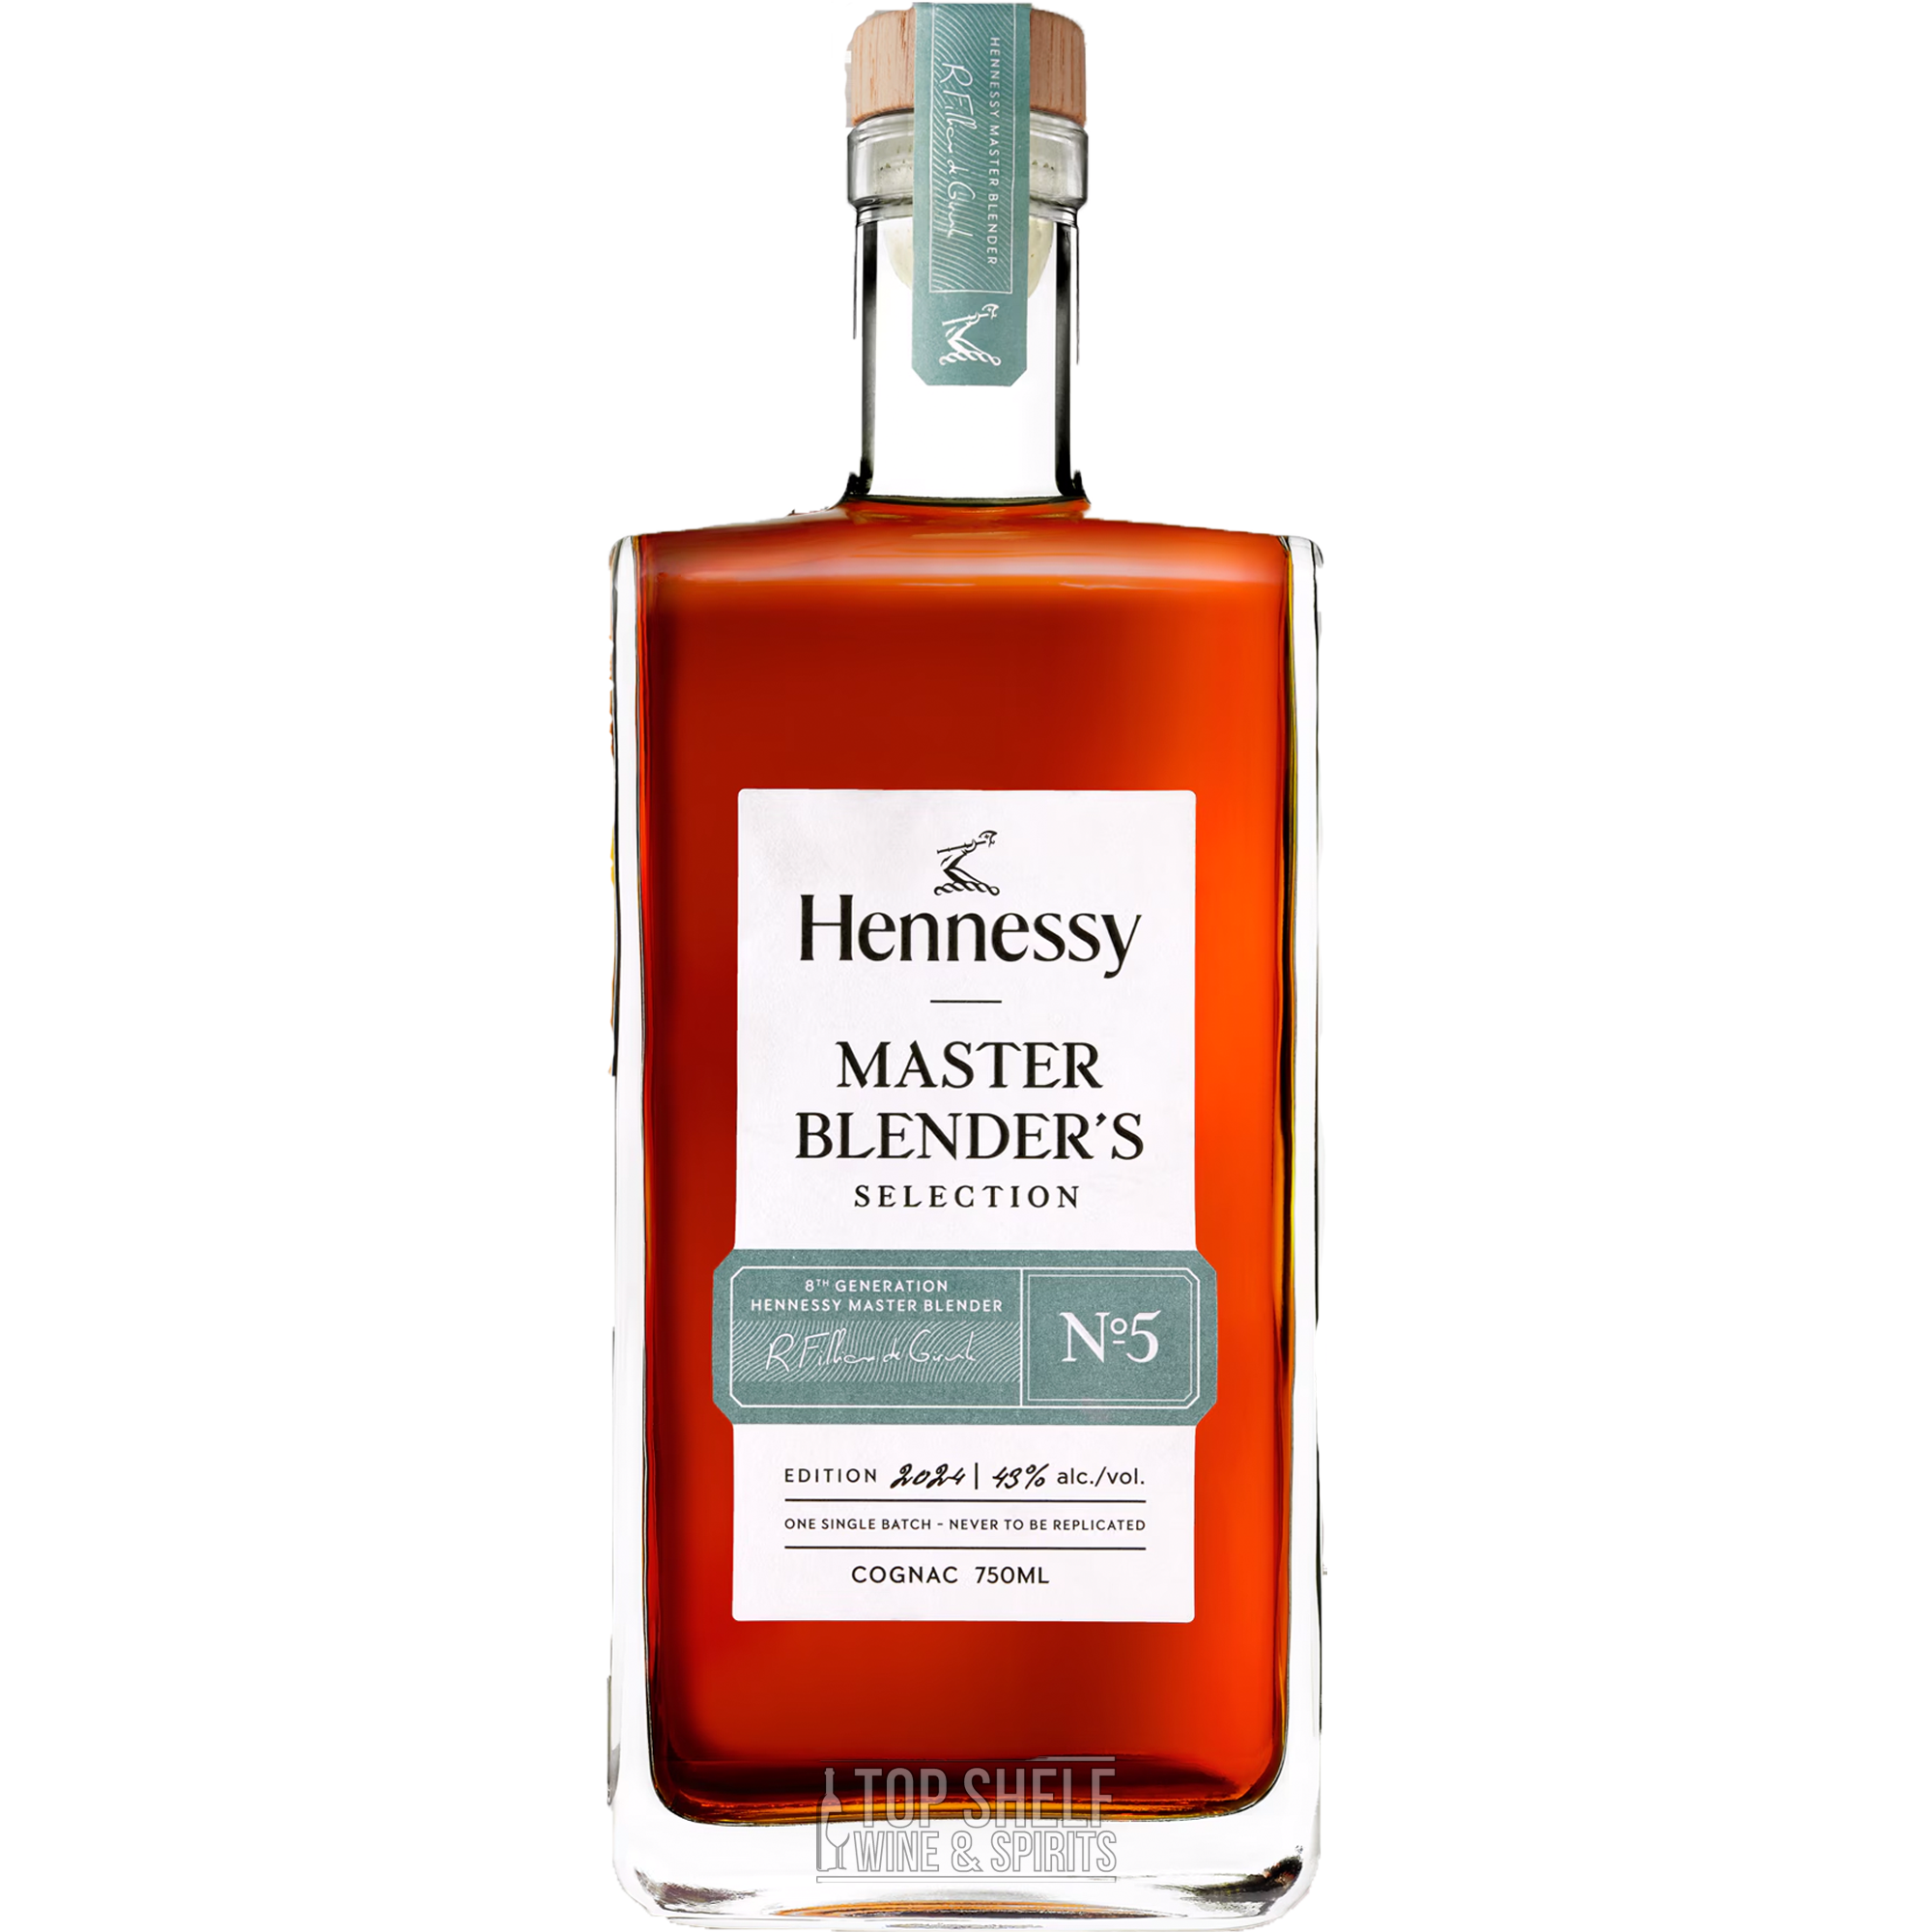 Hennessy Master Blender's Selection No. 5 Cognac